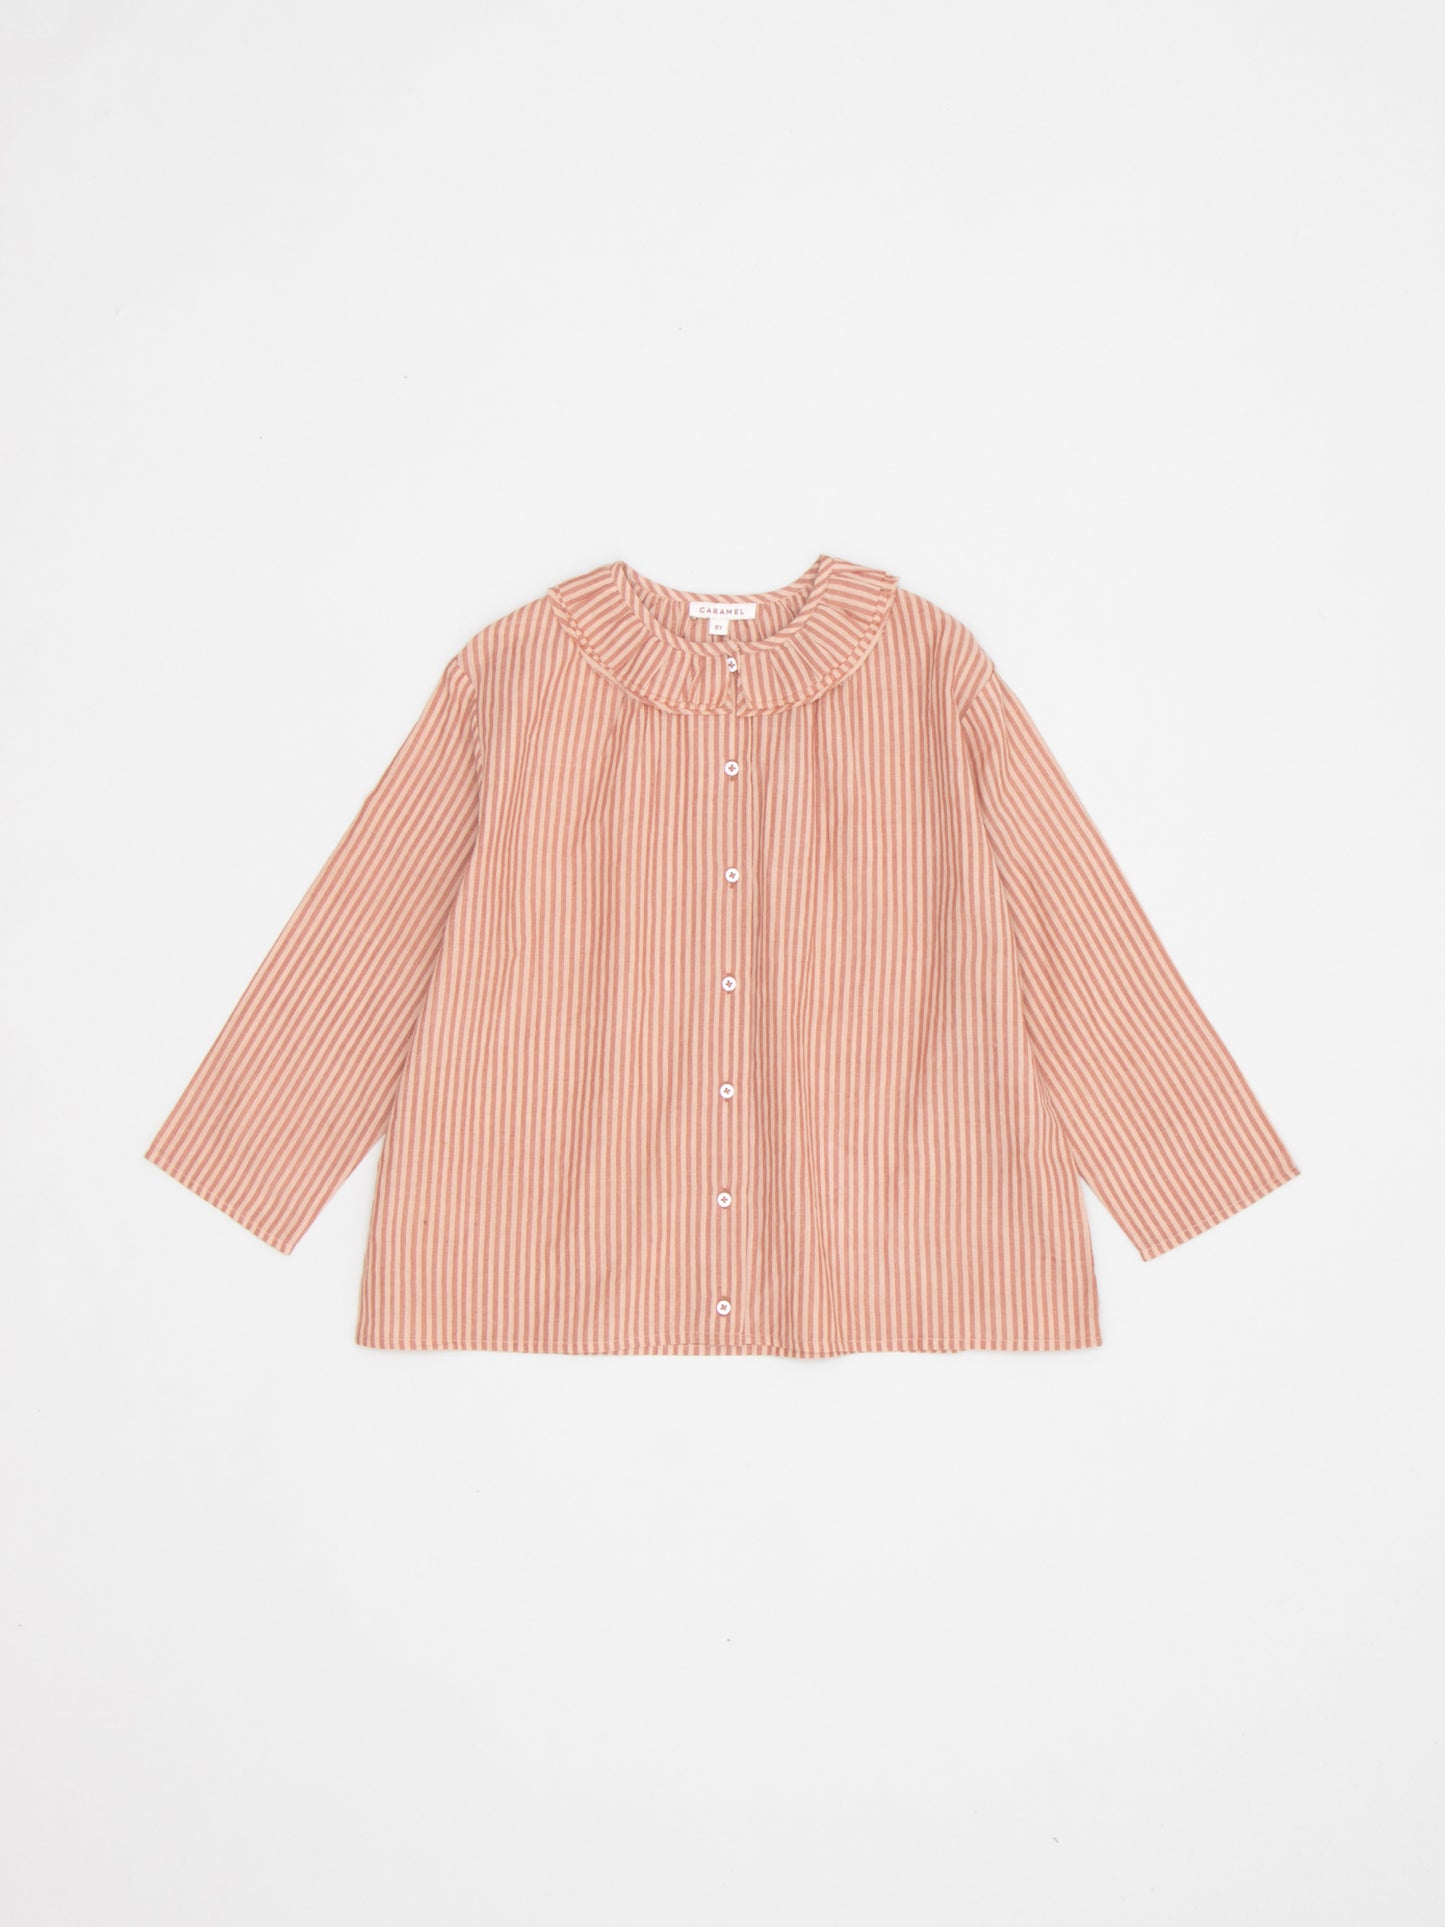 Caramel - Moon shirt - Dusty Rose Stripe